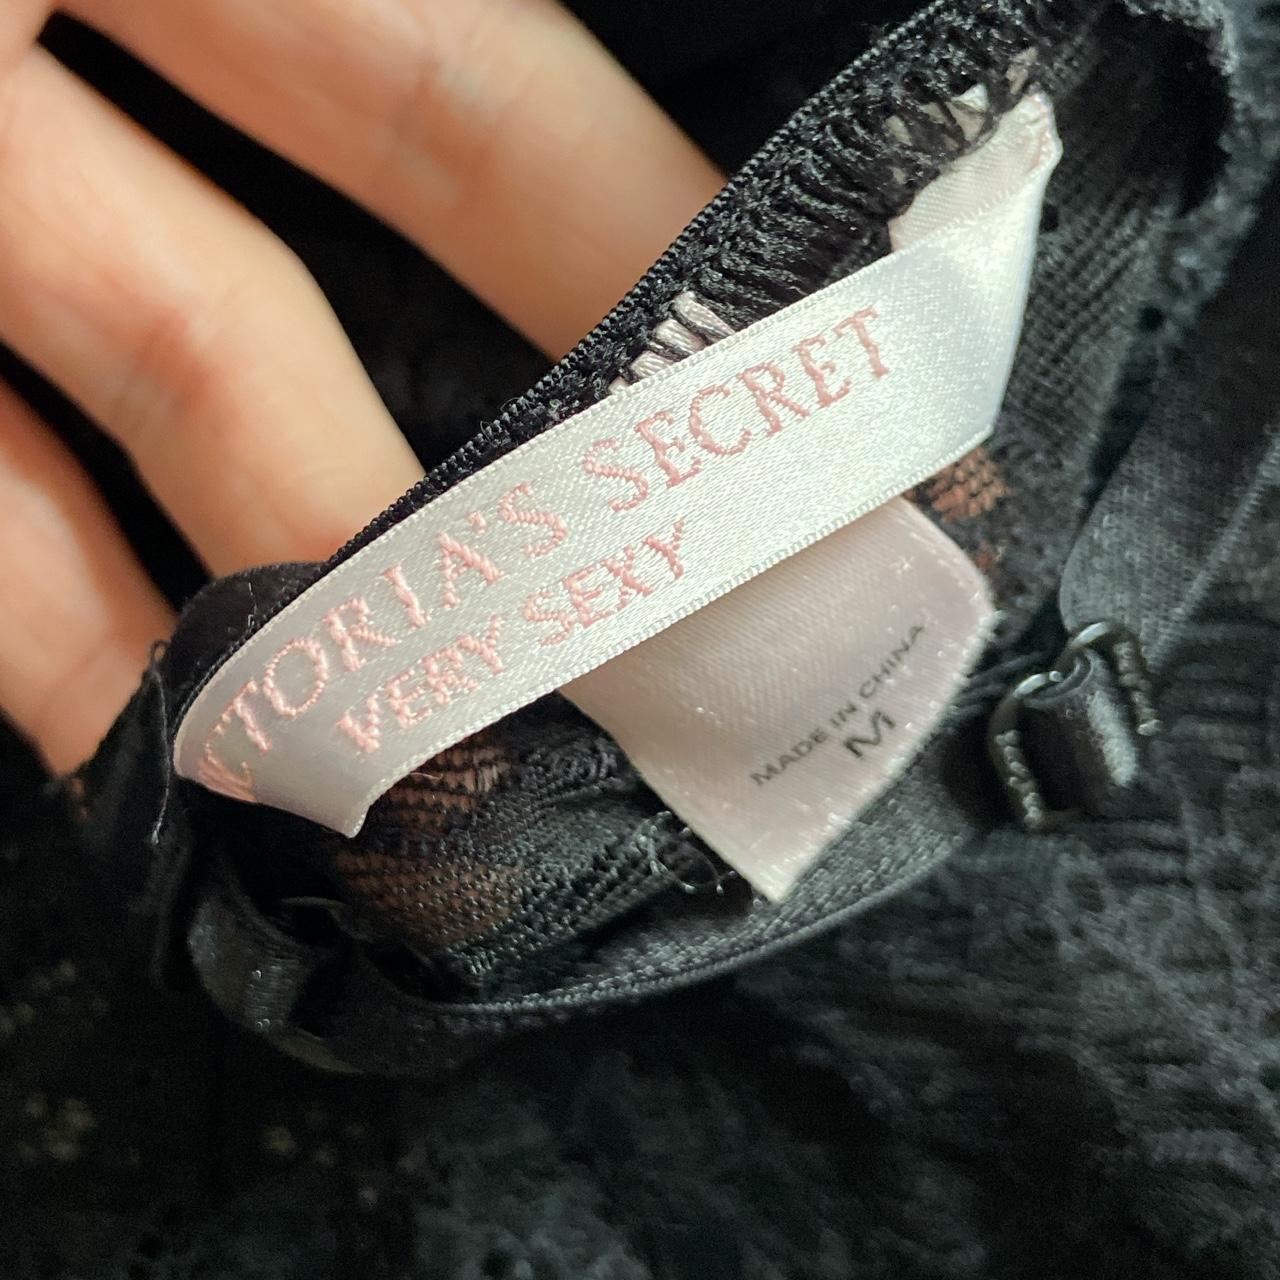 Victoria's Secret Very Sexy strappy lace balconet - Depop